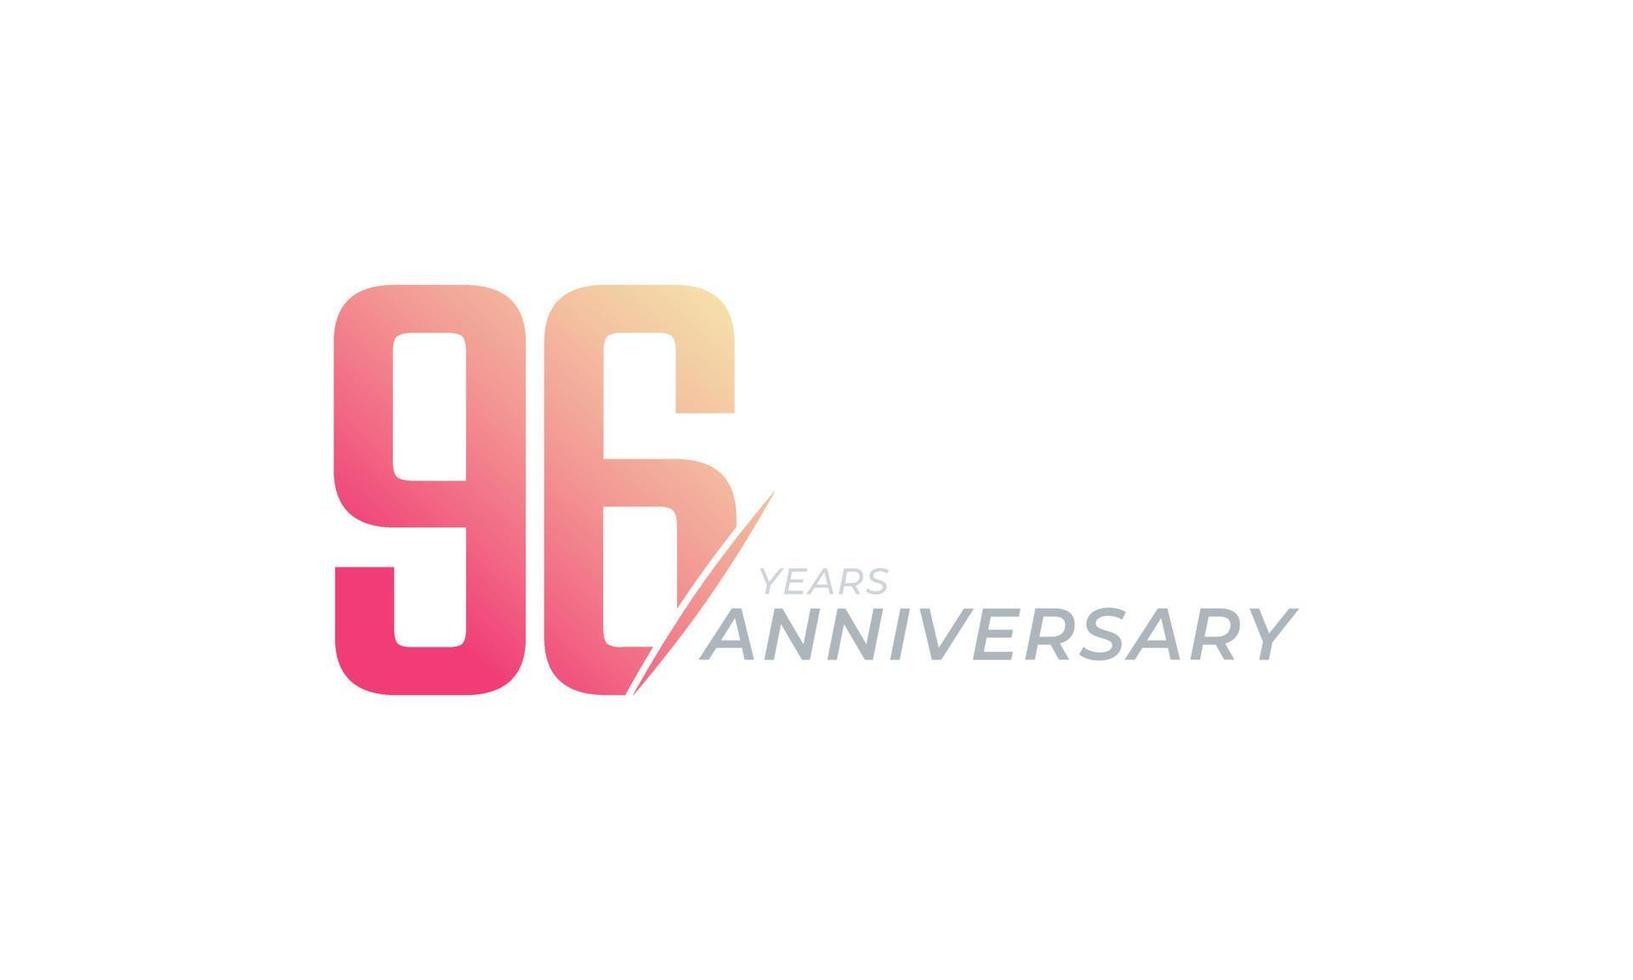 96 Year Anniversary Celebration Vector. Happy Anniversary Greeting Celebrates Template Design Illustration vector